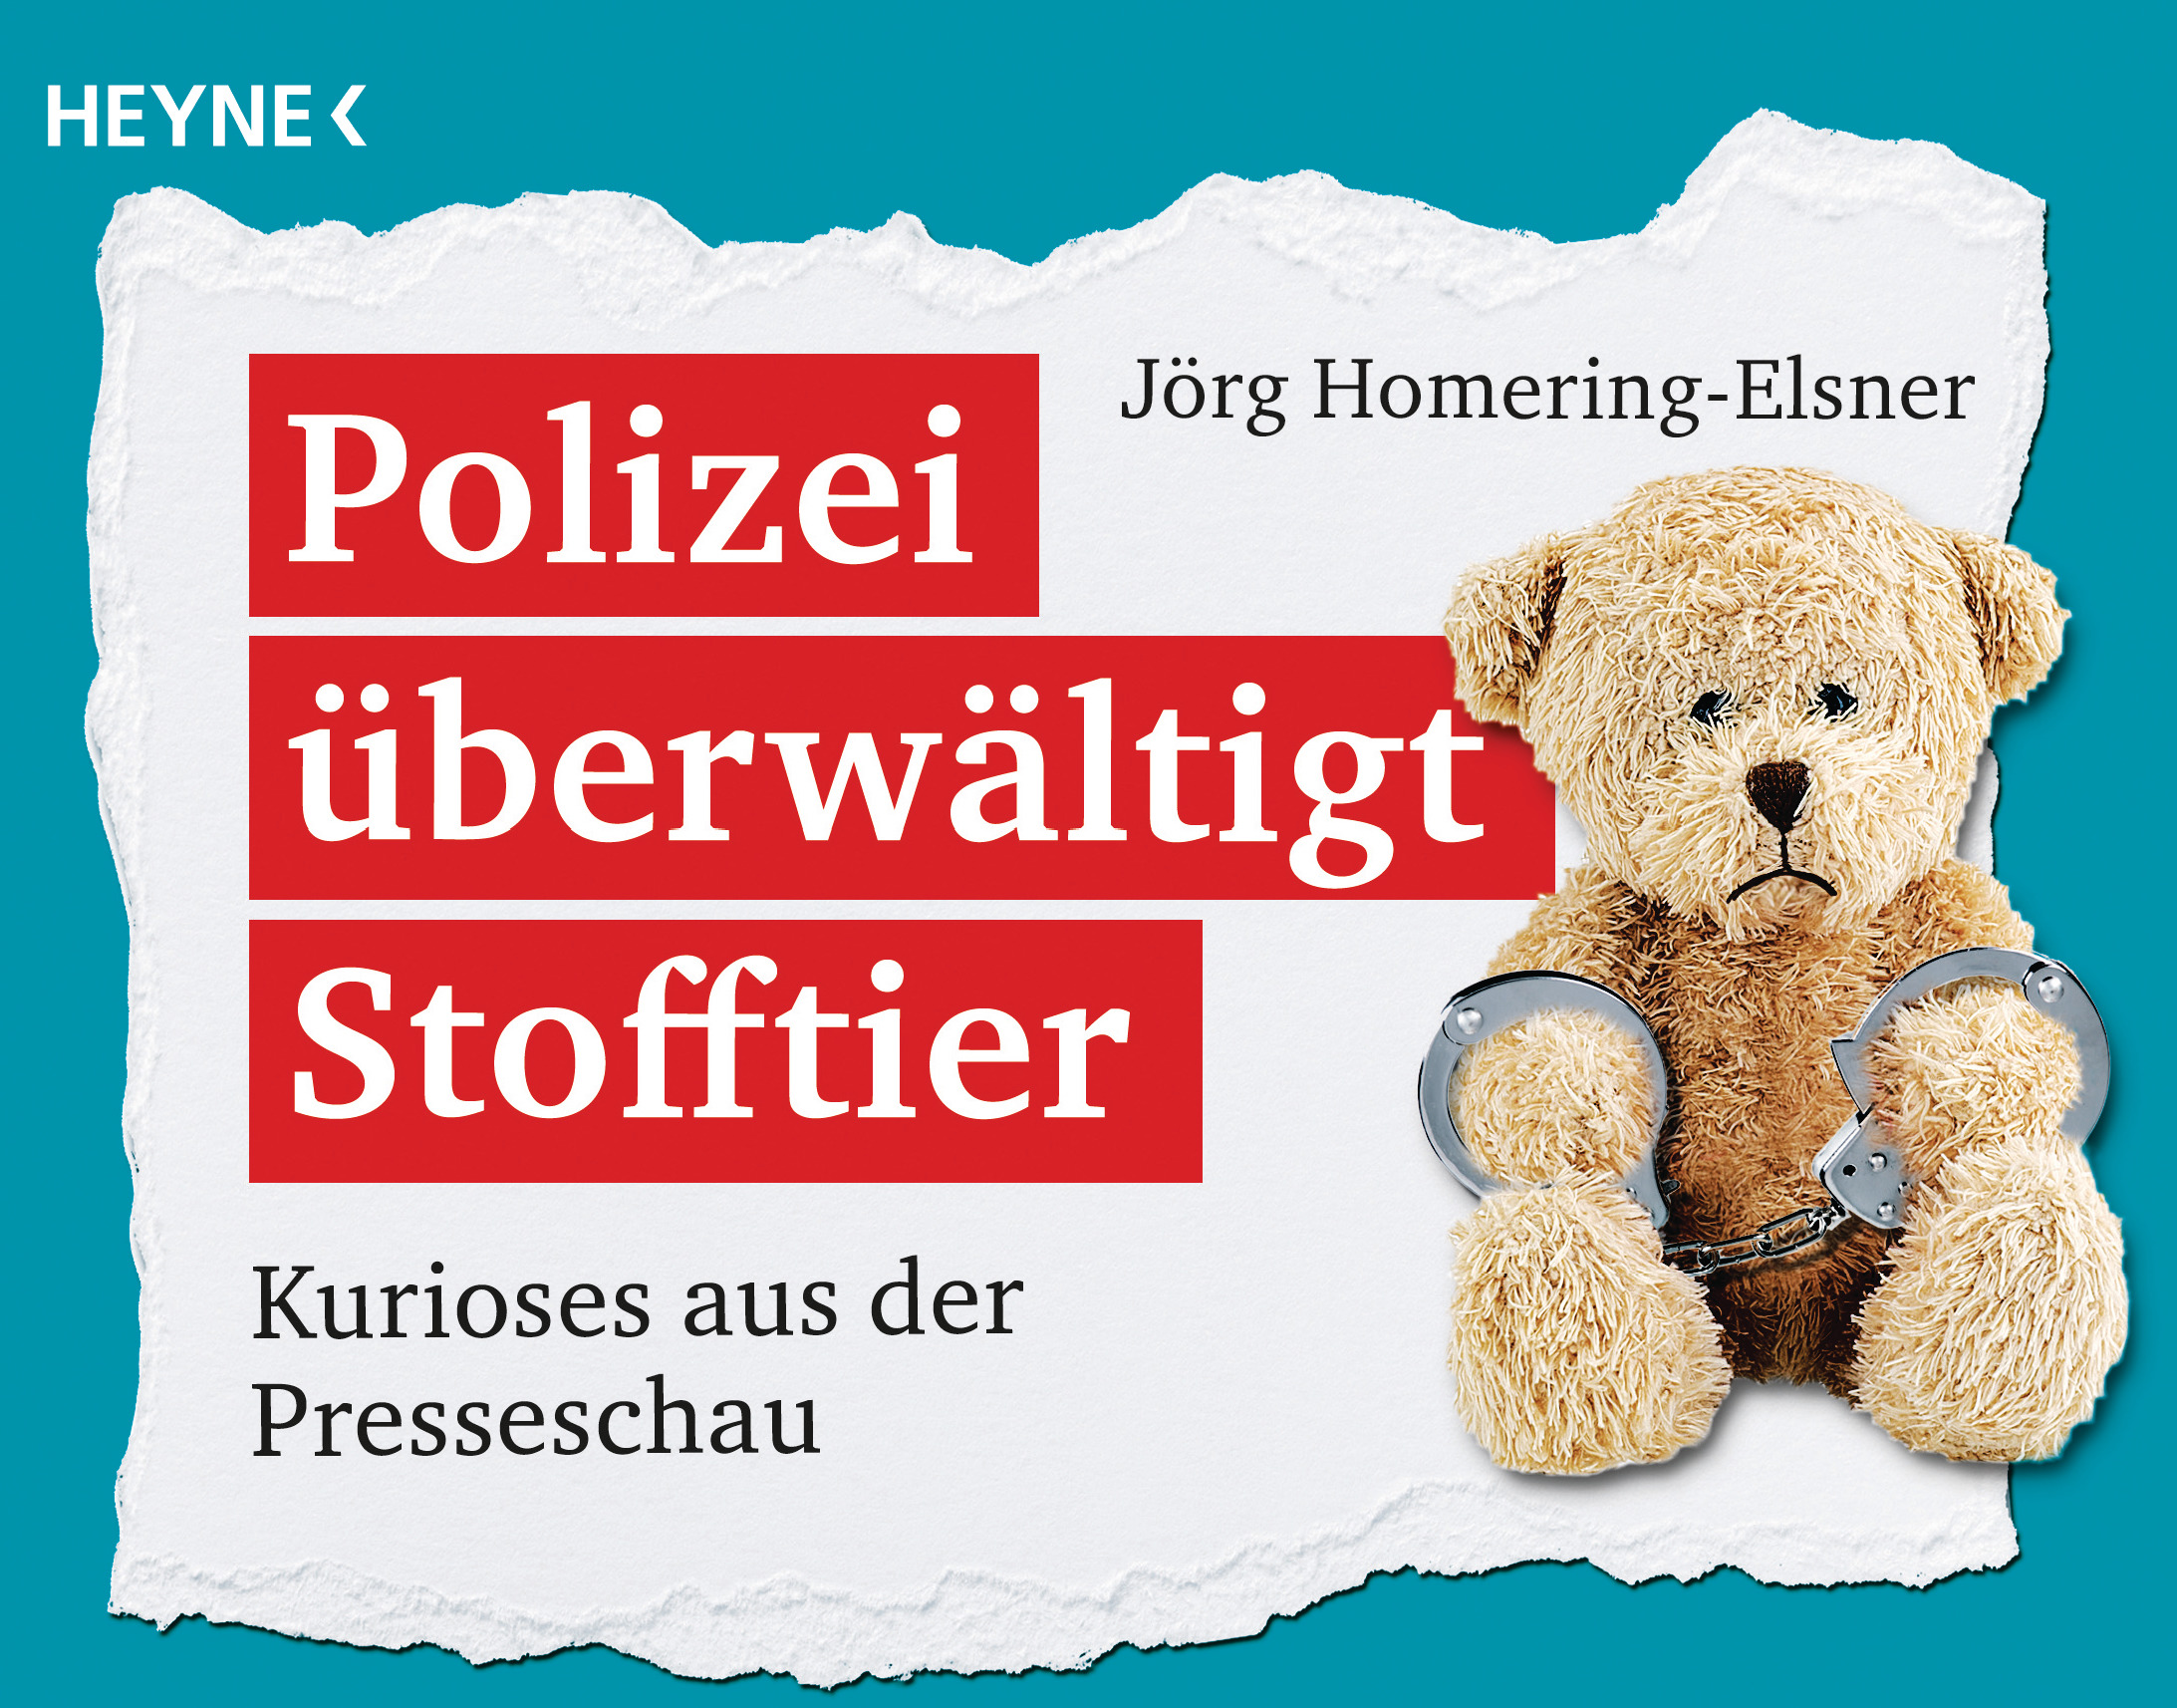 Jörg Homering-Elsner - Polizei überwältigt Stofftier Homering-Elsner_JPolizei_ueberwaeltigt_185132